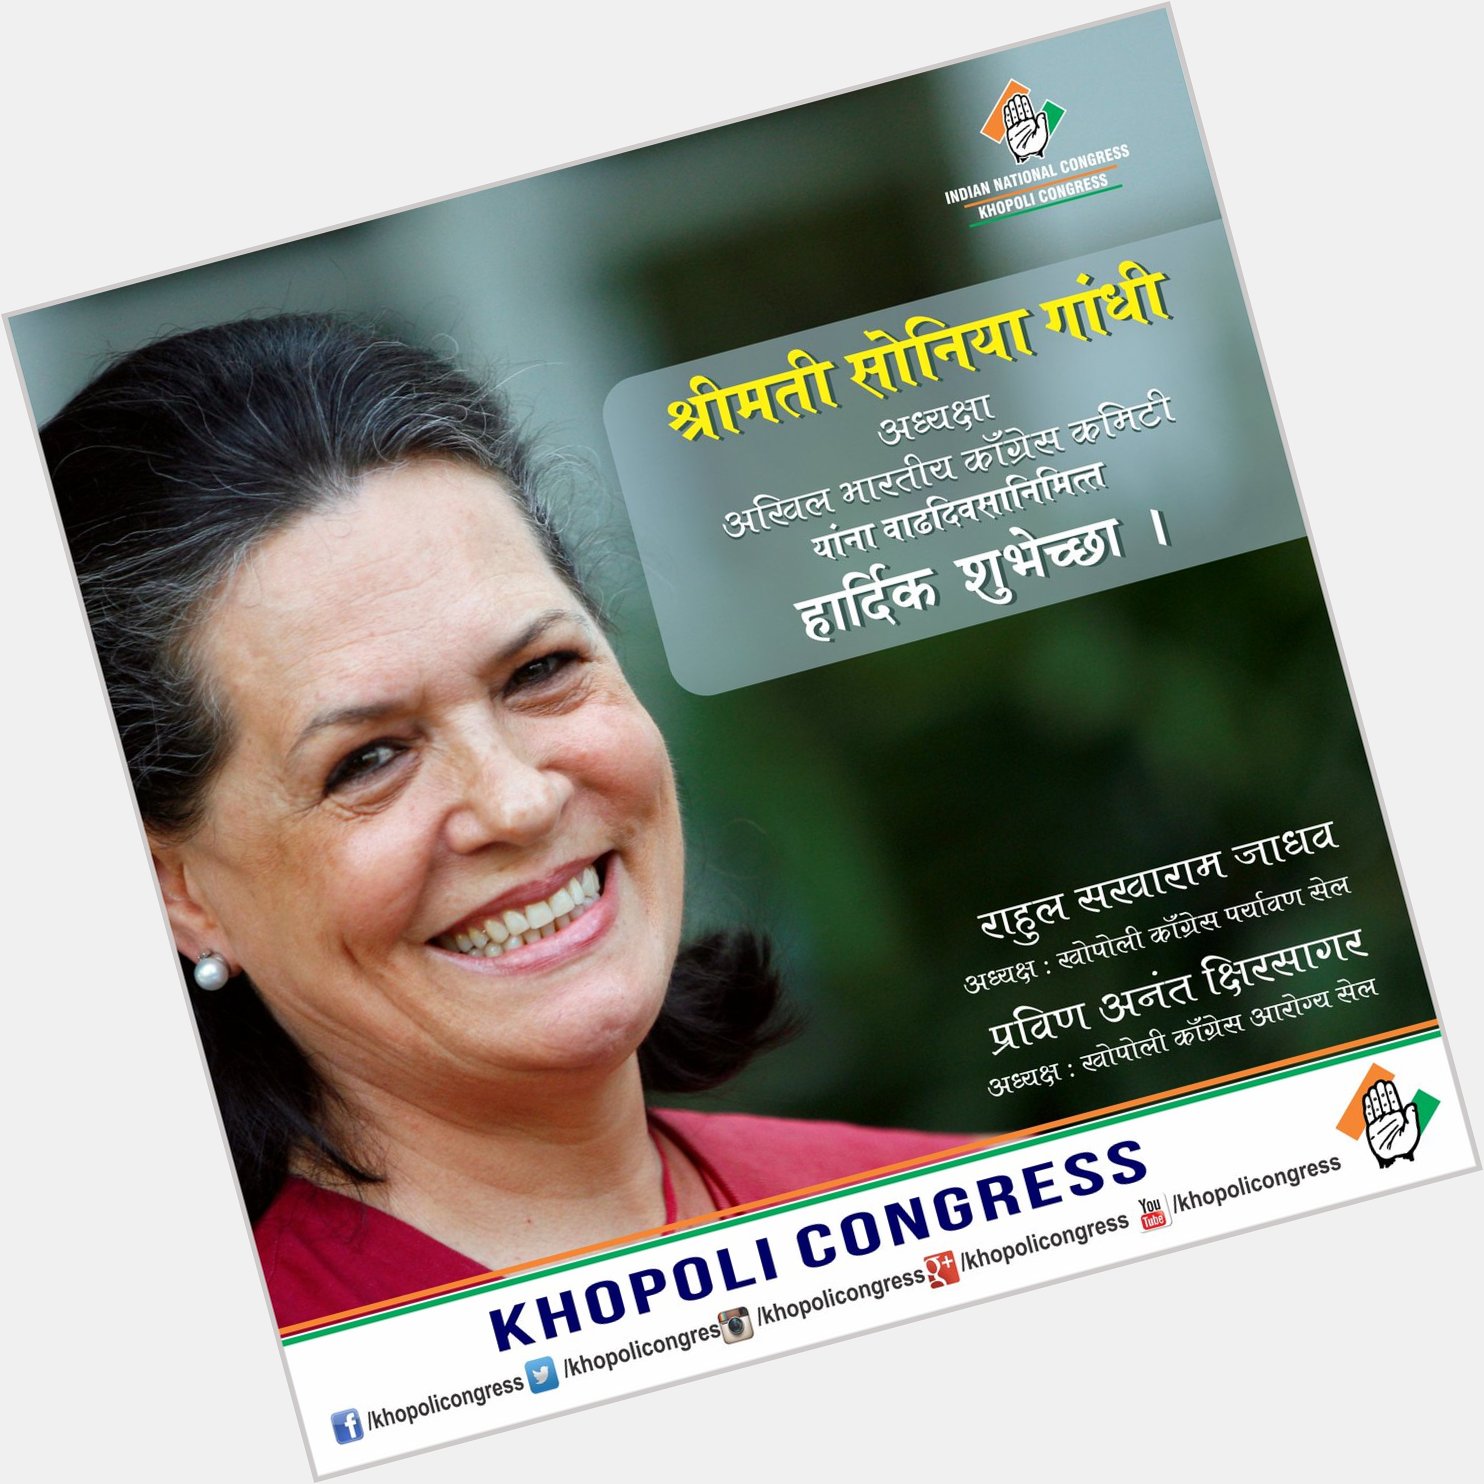 Khopoli Congress wishes very happy birthday to Congress President Smt Sonia Gandhi. 